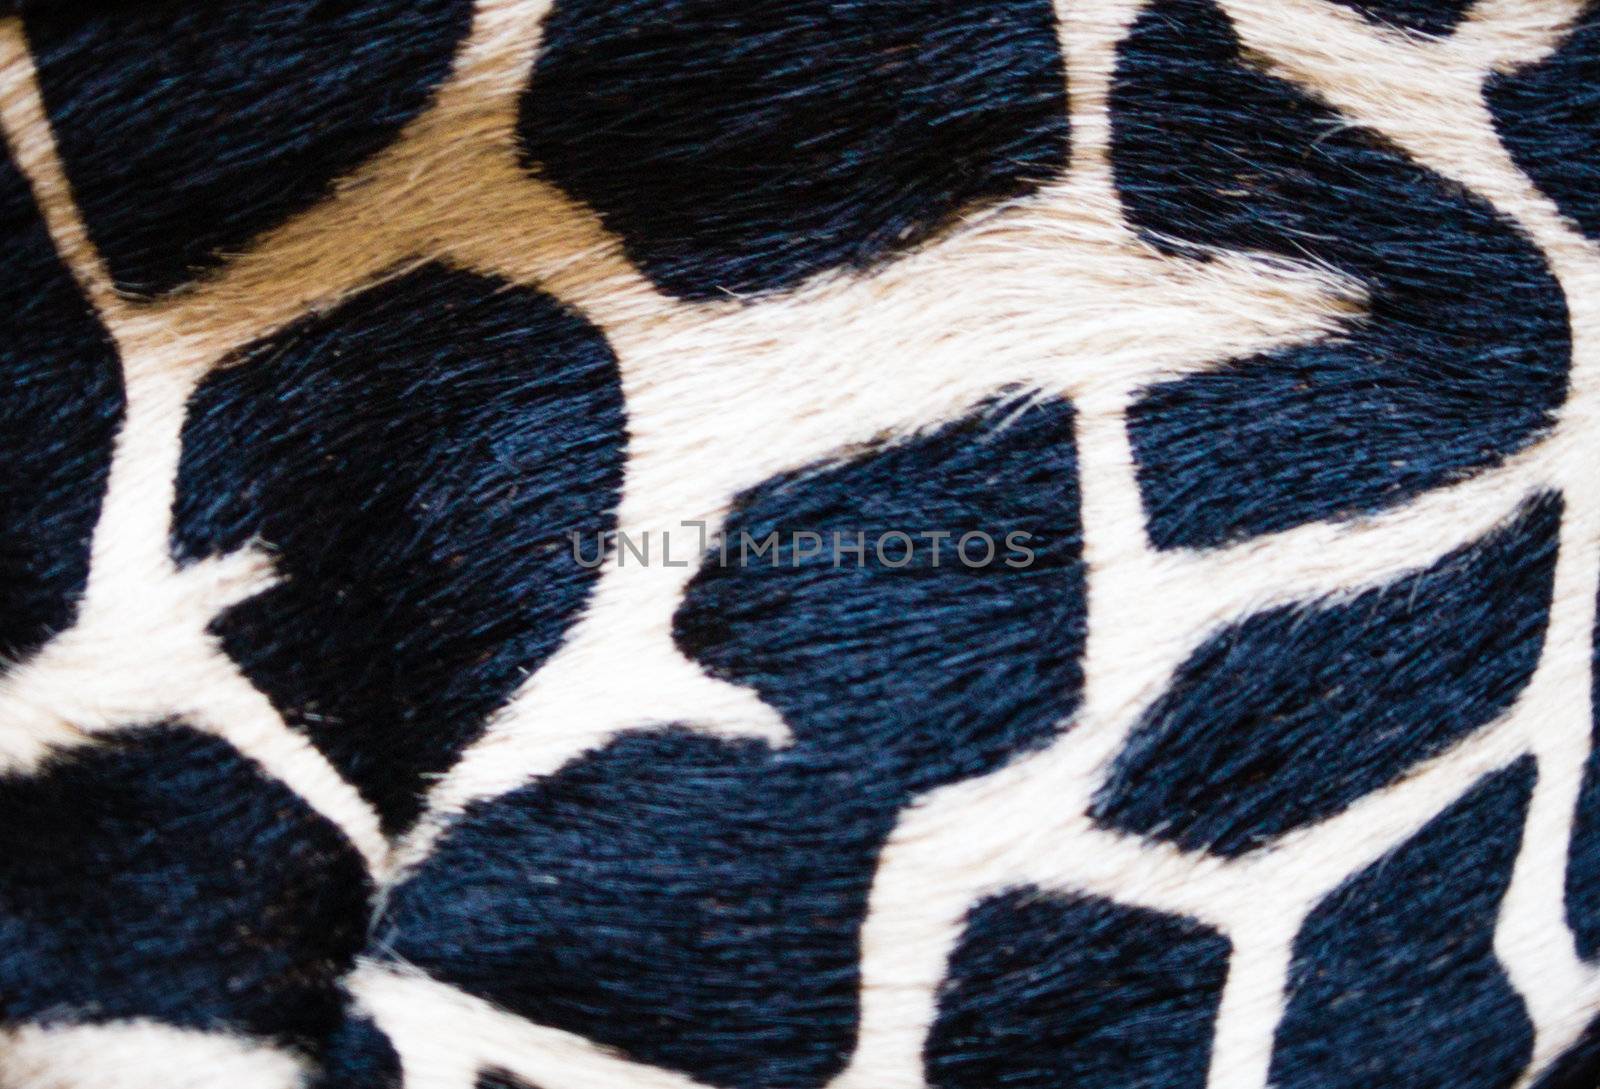 Giraffe skin texture by doble.d